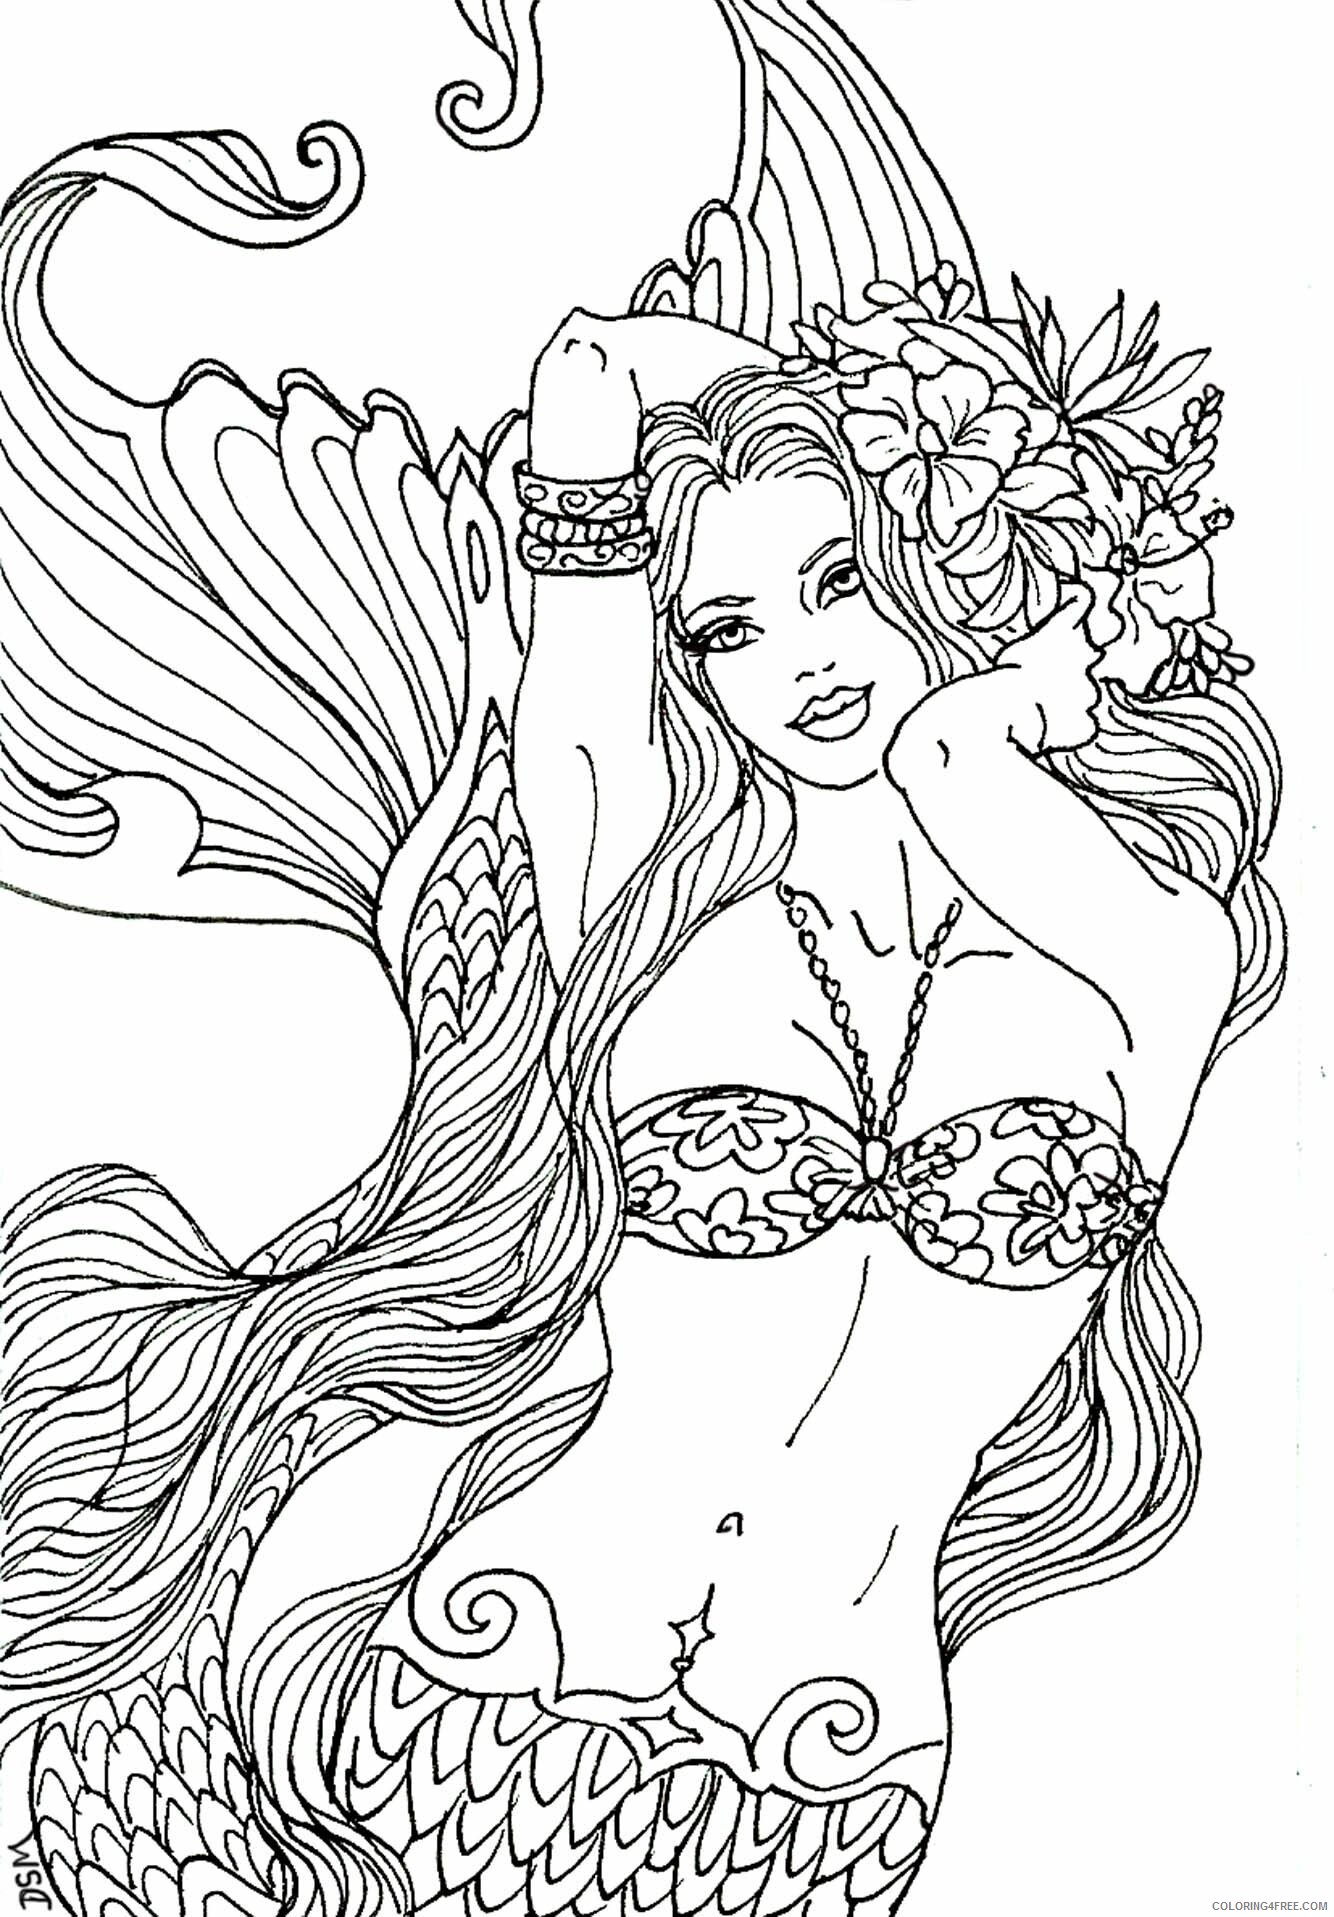 Mermaid Coloring Pages Mermaid for Adult Printable 2021 4115 Coloring4free